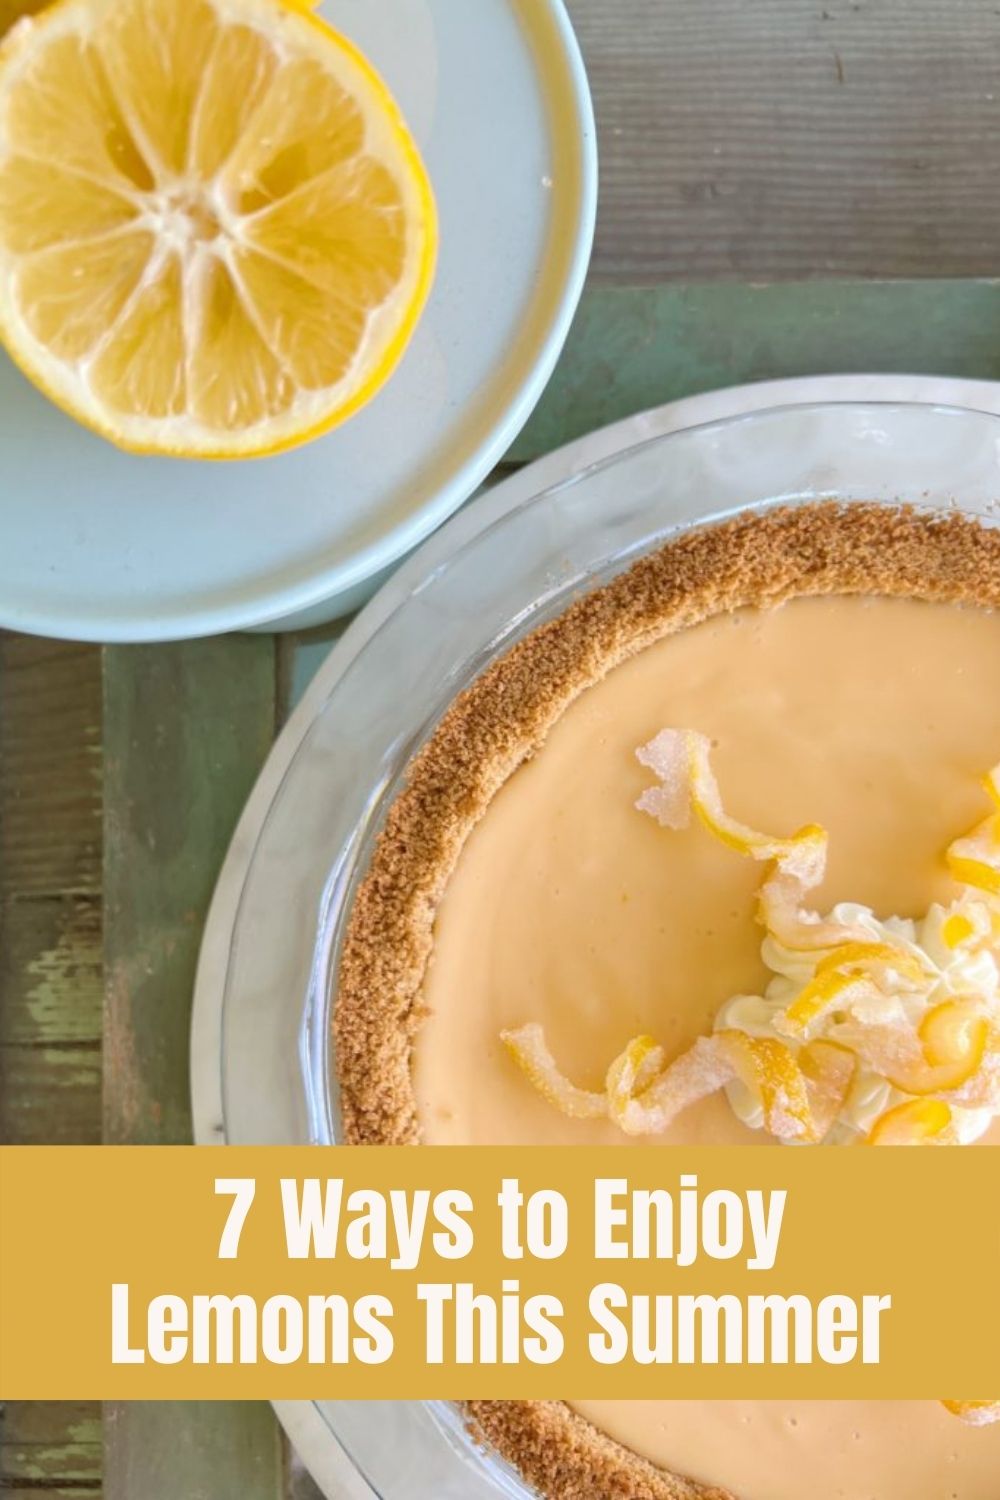 I love lemons, lemon decor, and Meyer lemon recipes. So today I am sharing seven ways to enjoy lemons this summer.